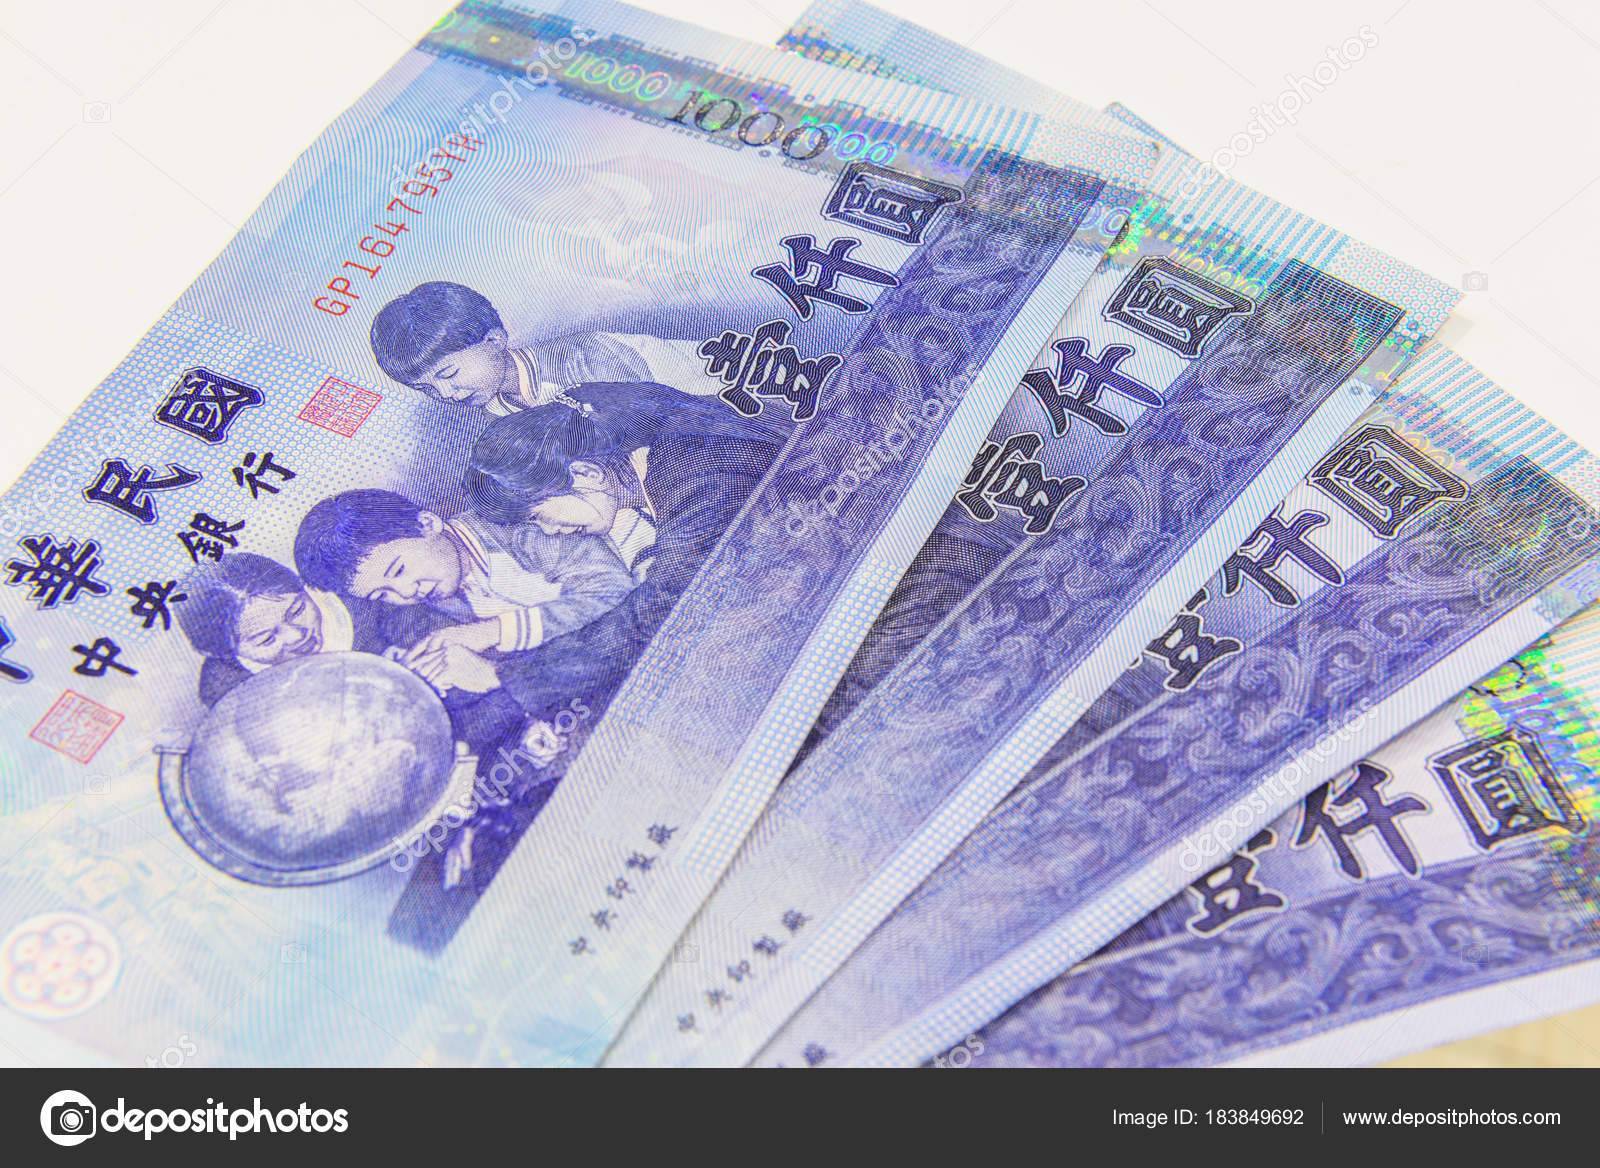 Тайвань деньги. Тайваньские деньги. Валюта Тайваня. Новый тайваньский доллар. Валюта на Тайване и в Китае.